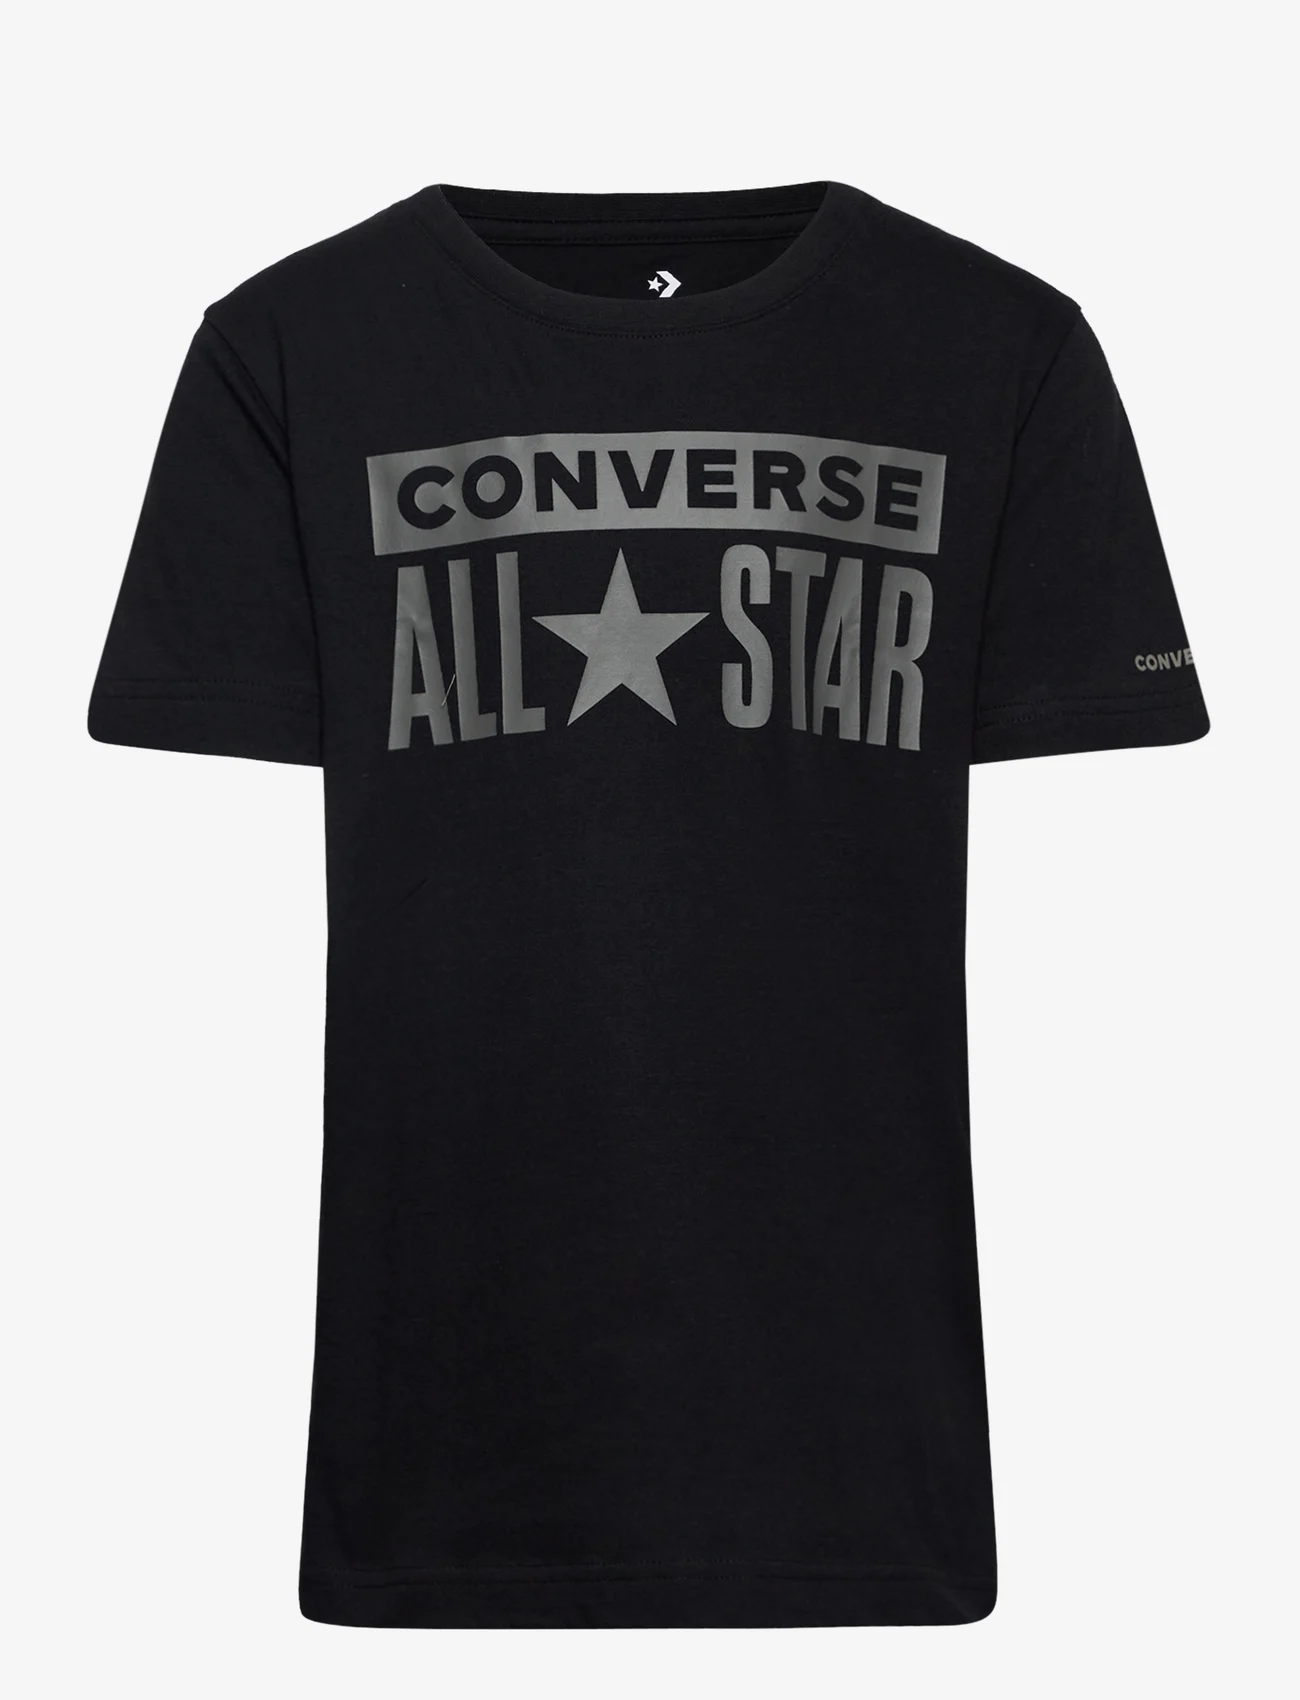 Converse - ALL STAR SS TEE - kurzärmelig - black - 0